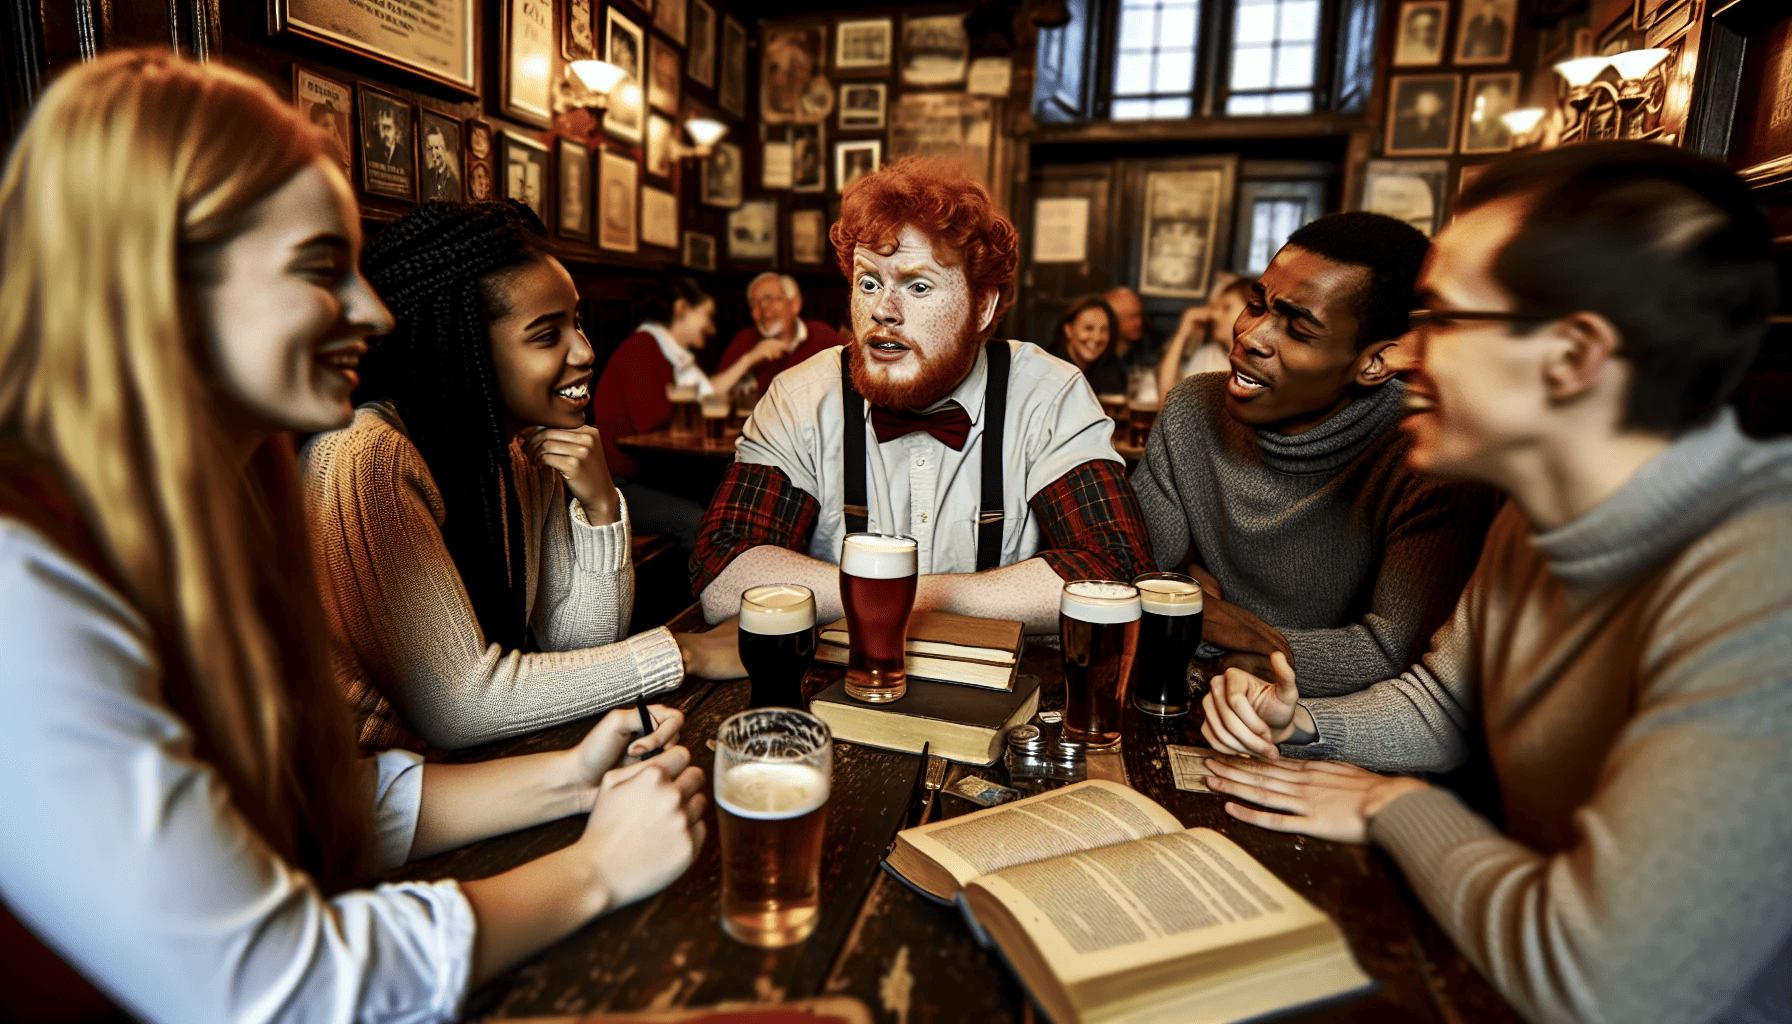 An Irishman enjoying a scholarly discussion in a pub